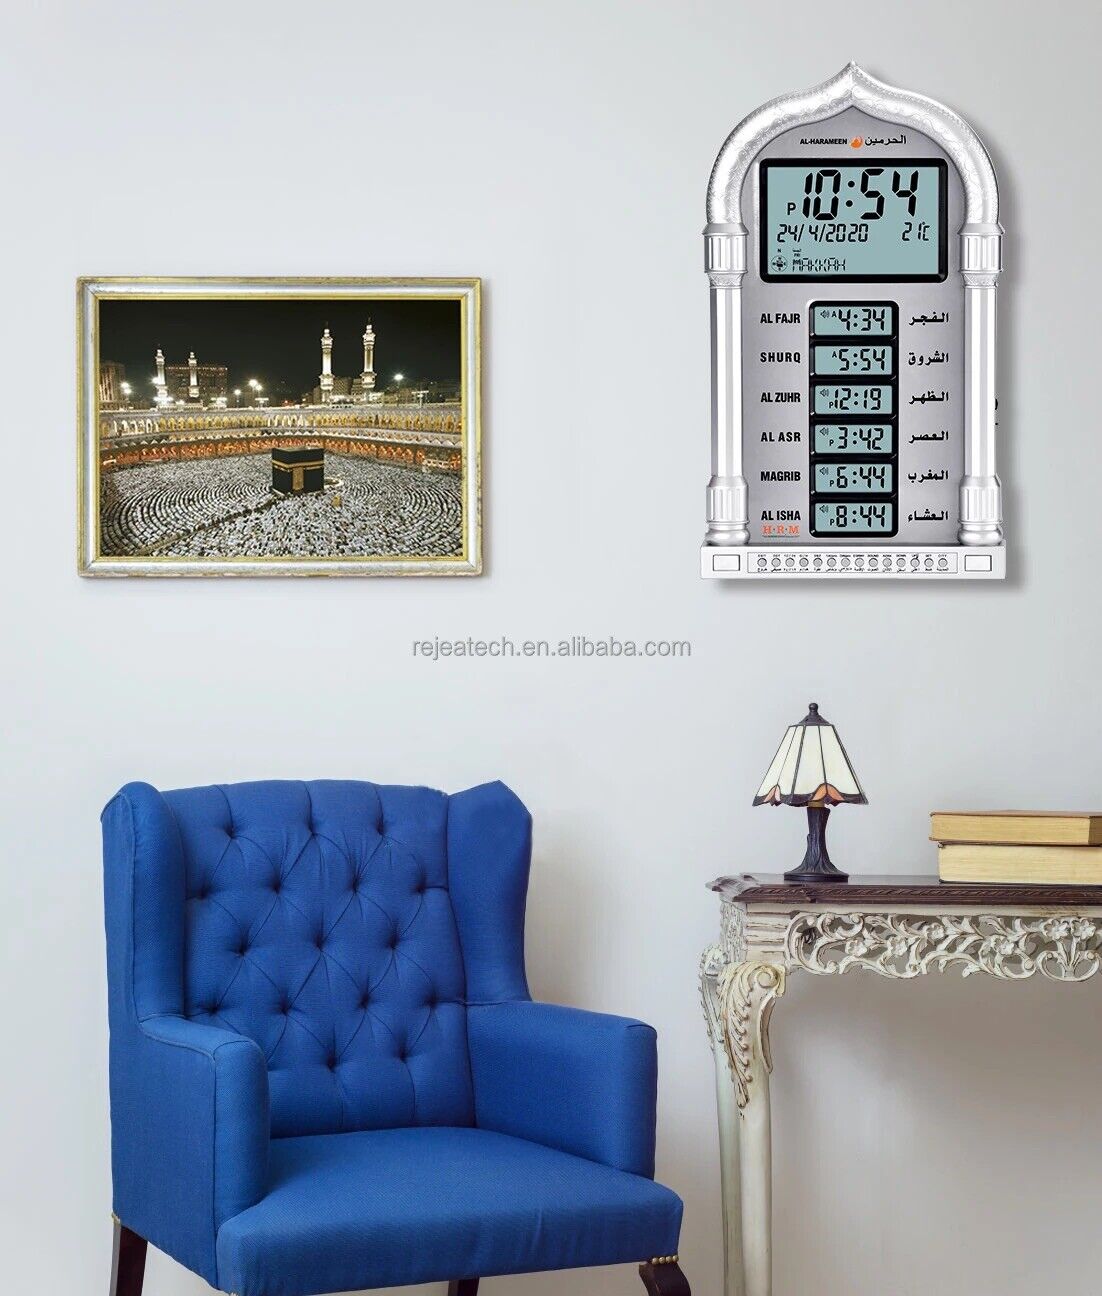 2022 Islamic Azan Wall Clock Alarm Calendar Muslim Prayer Office Home Decor Gift